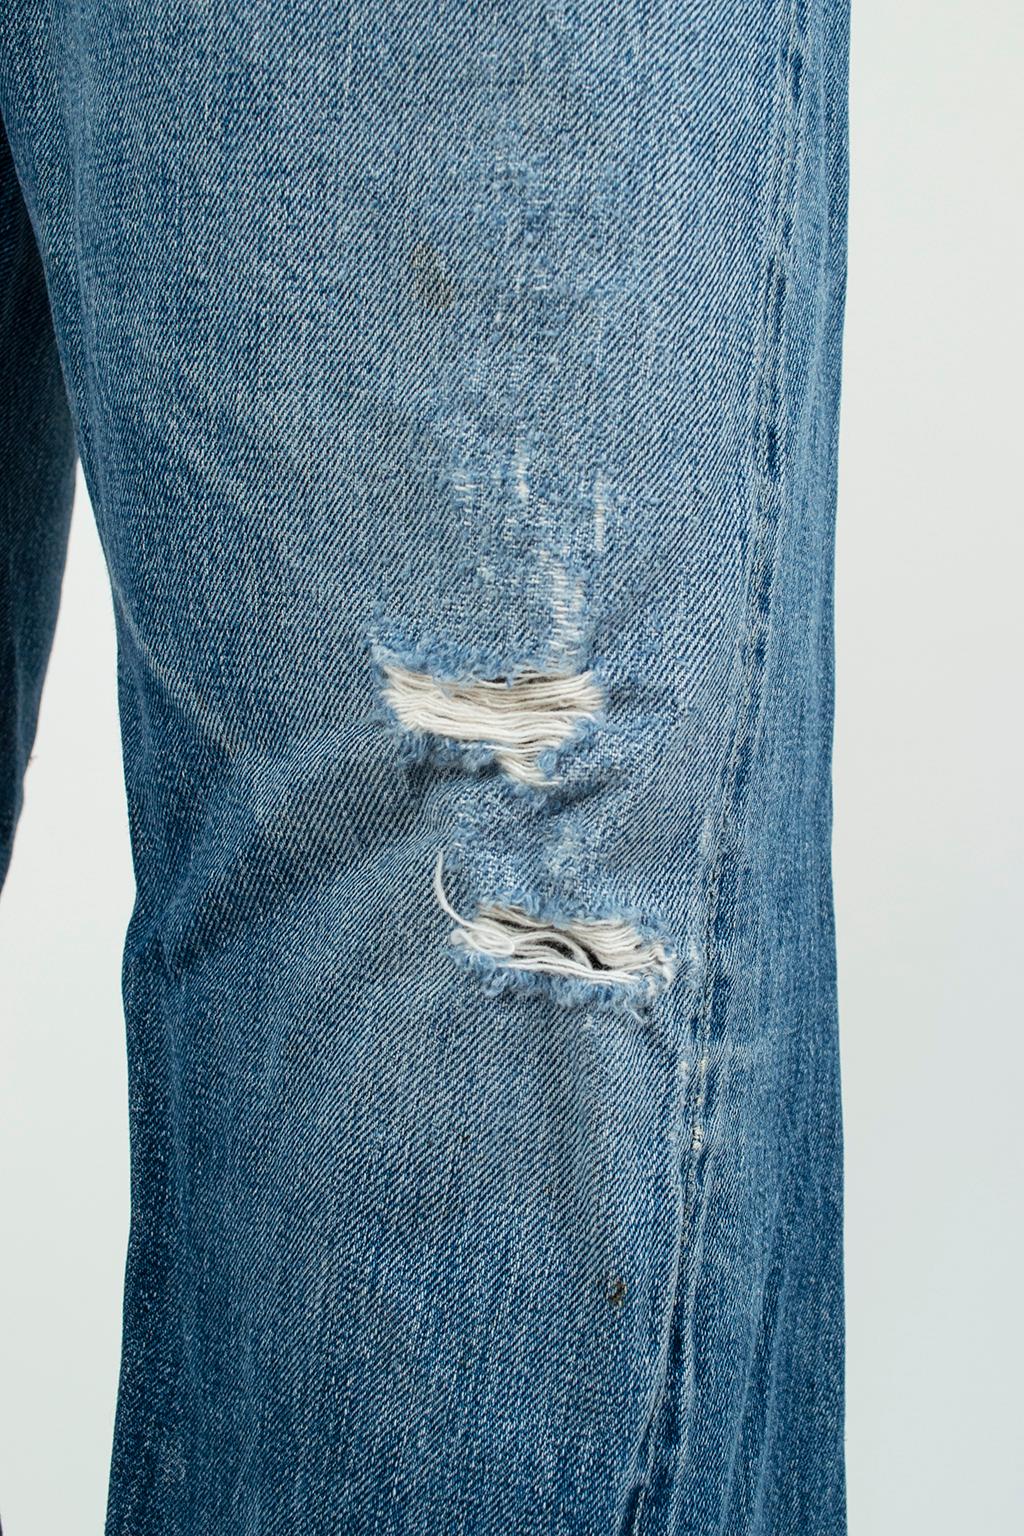 Men's Levi Strauss 501XX Denim Jeans with Hidden Rivets – size 32 x 38, 1962-64 13